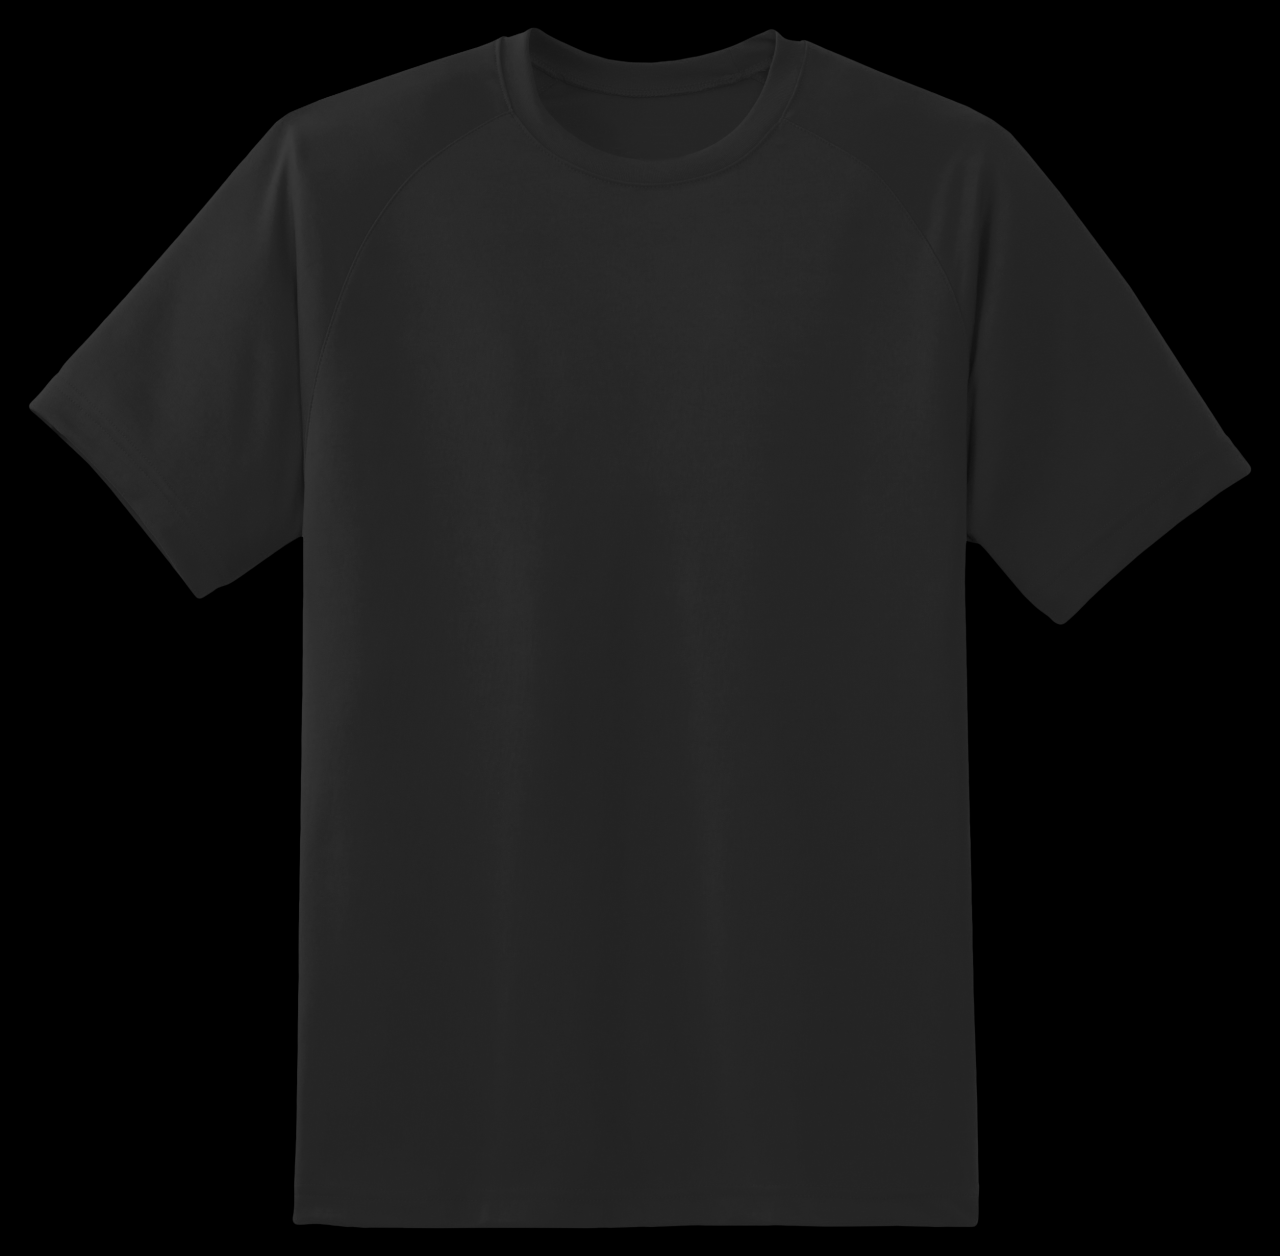 Realistic Black T Shirt Mockup